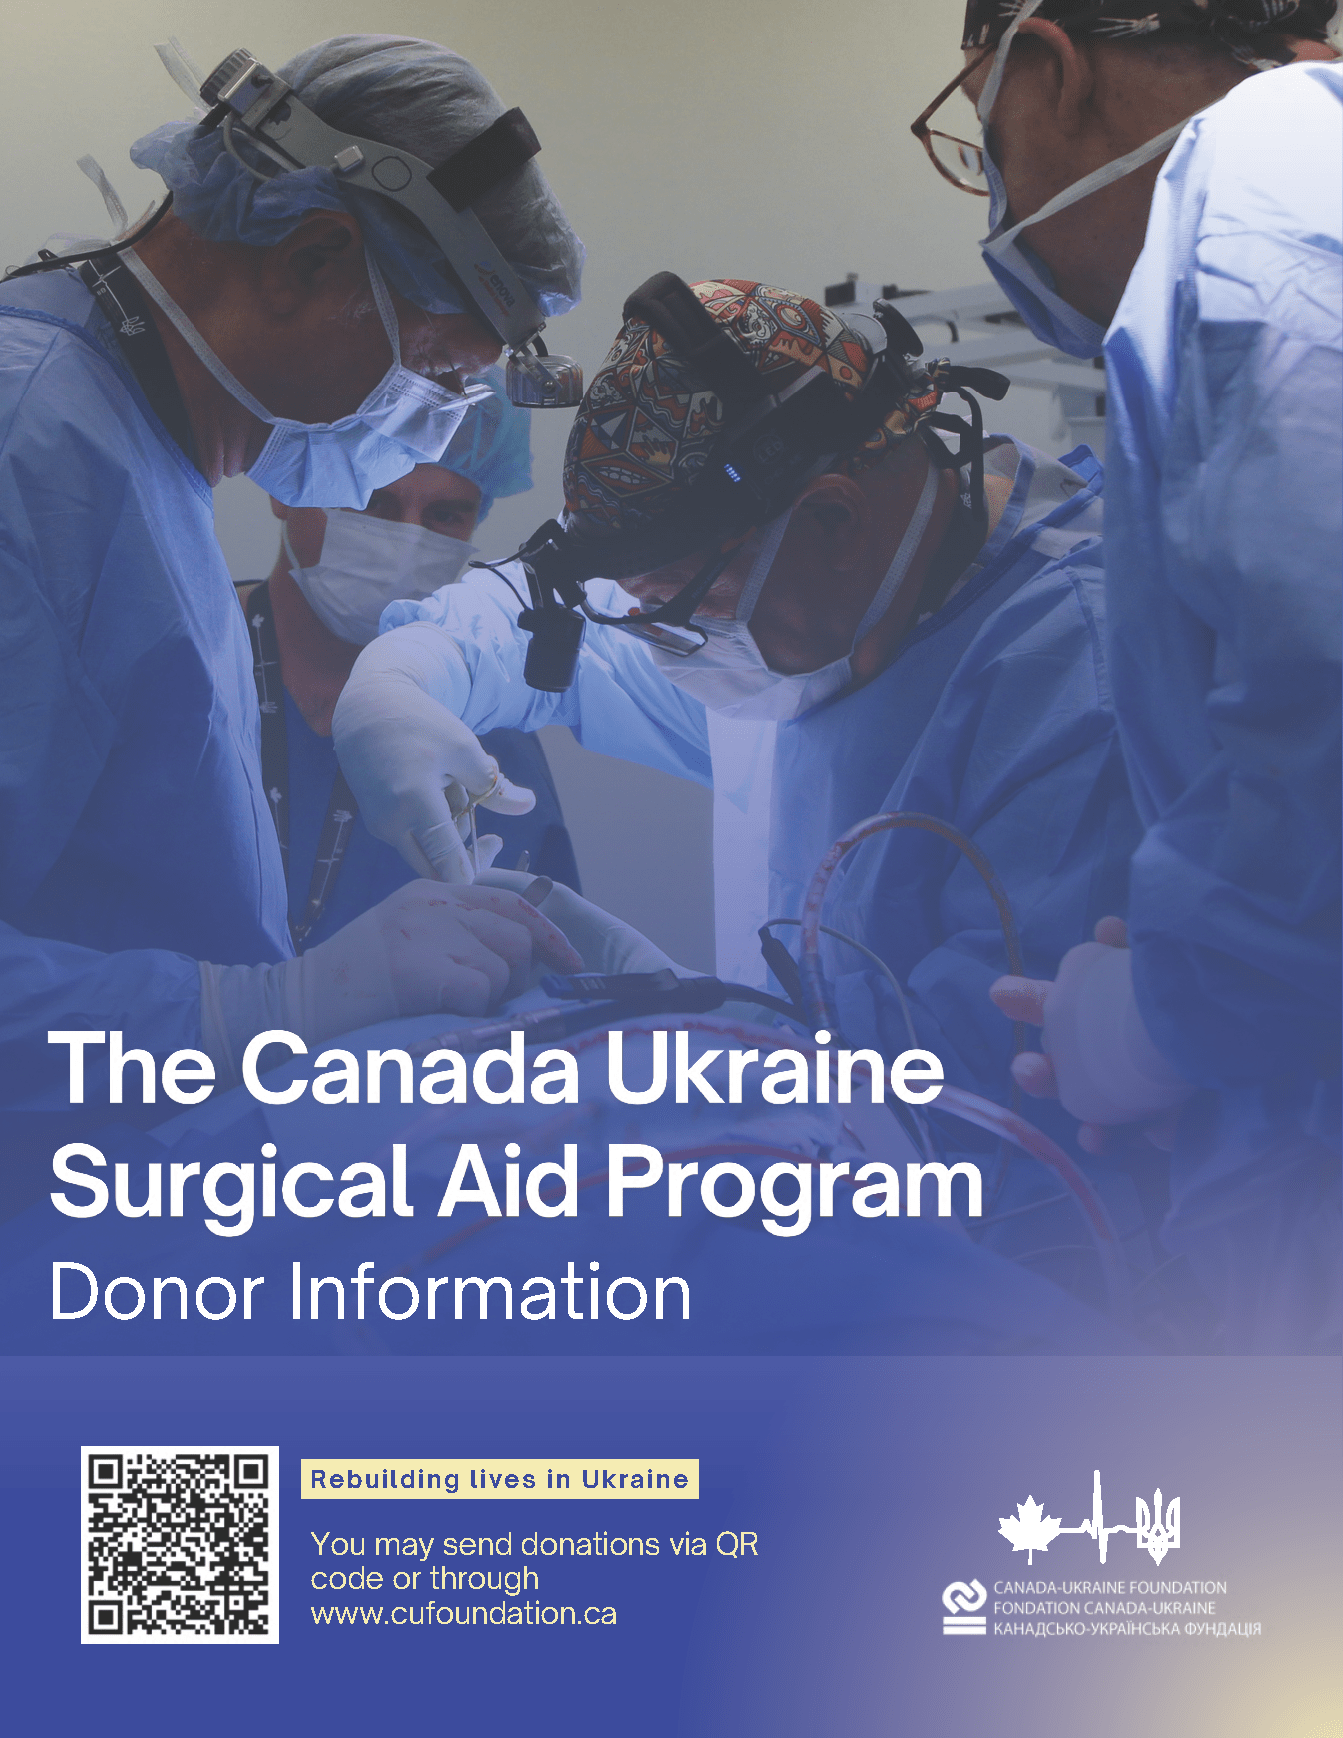 The Canada Ukraine Surgical Aid Program presentation preview image